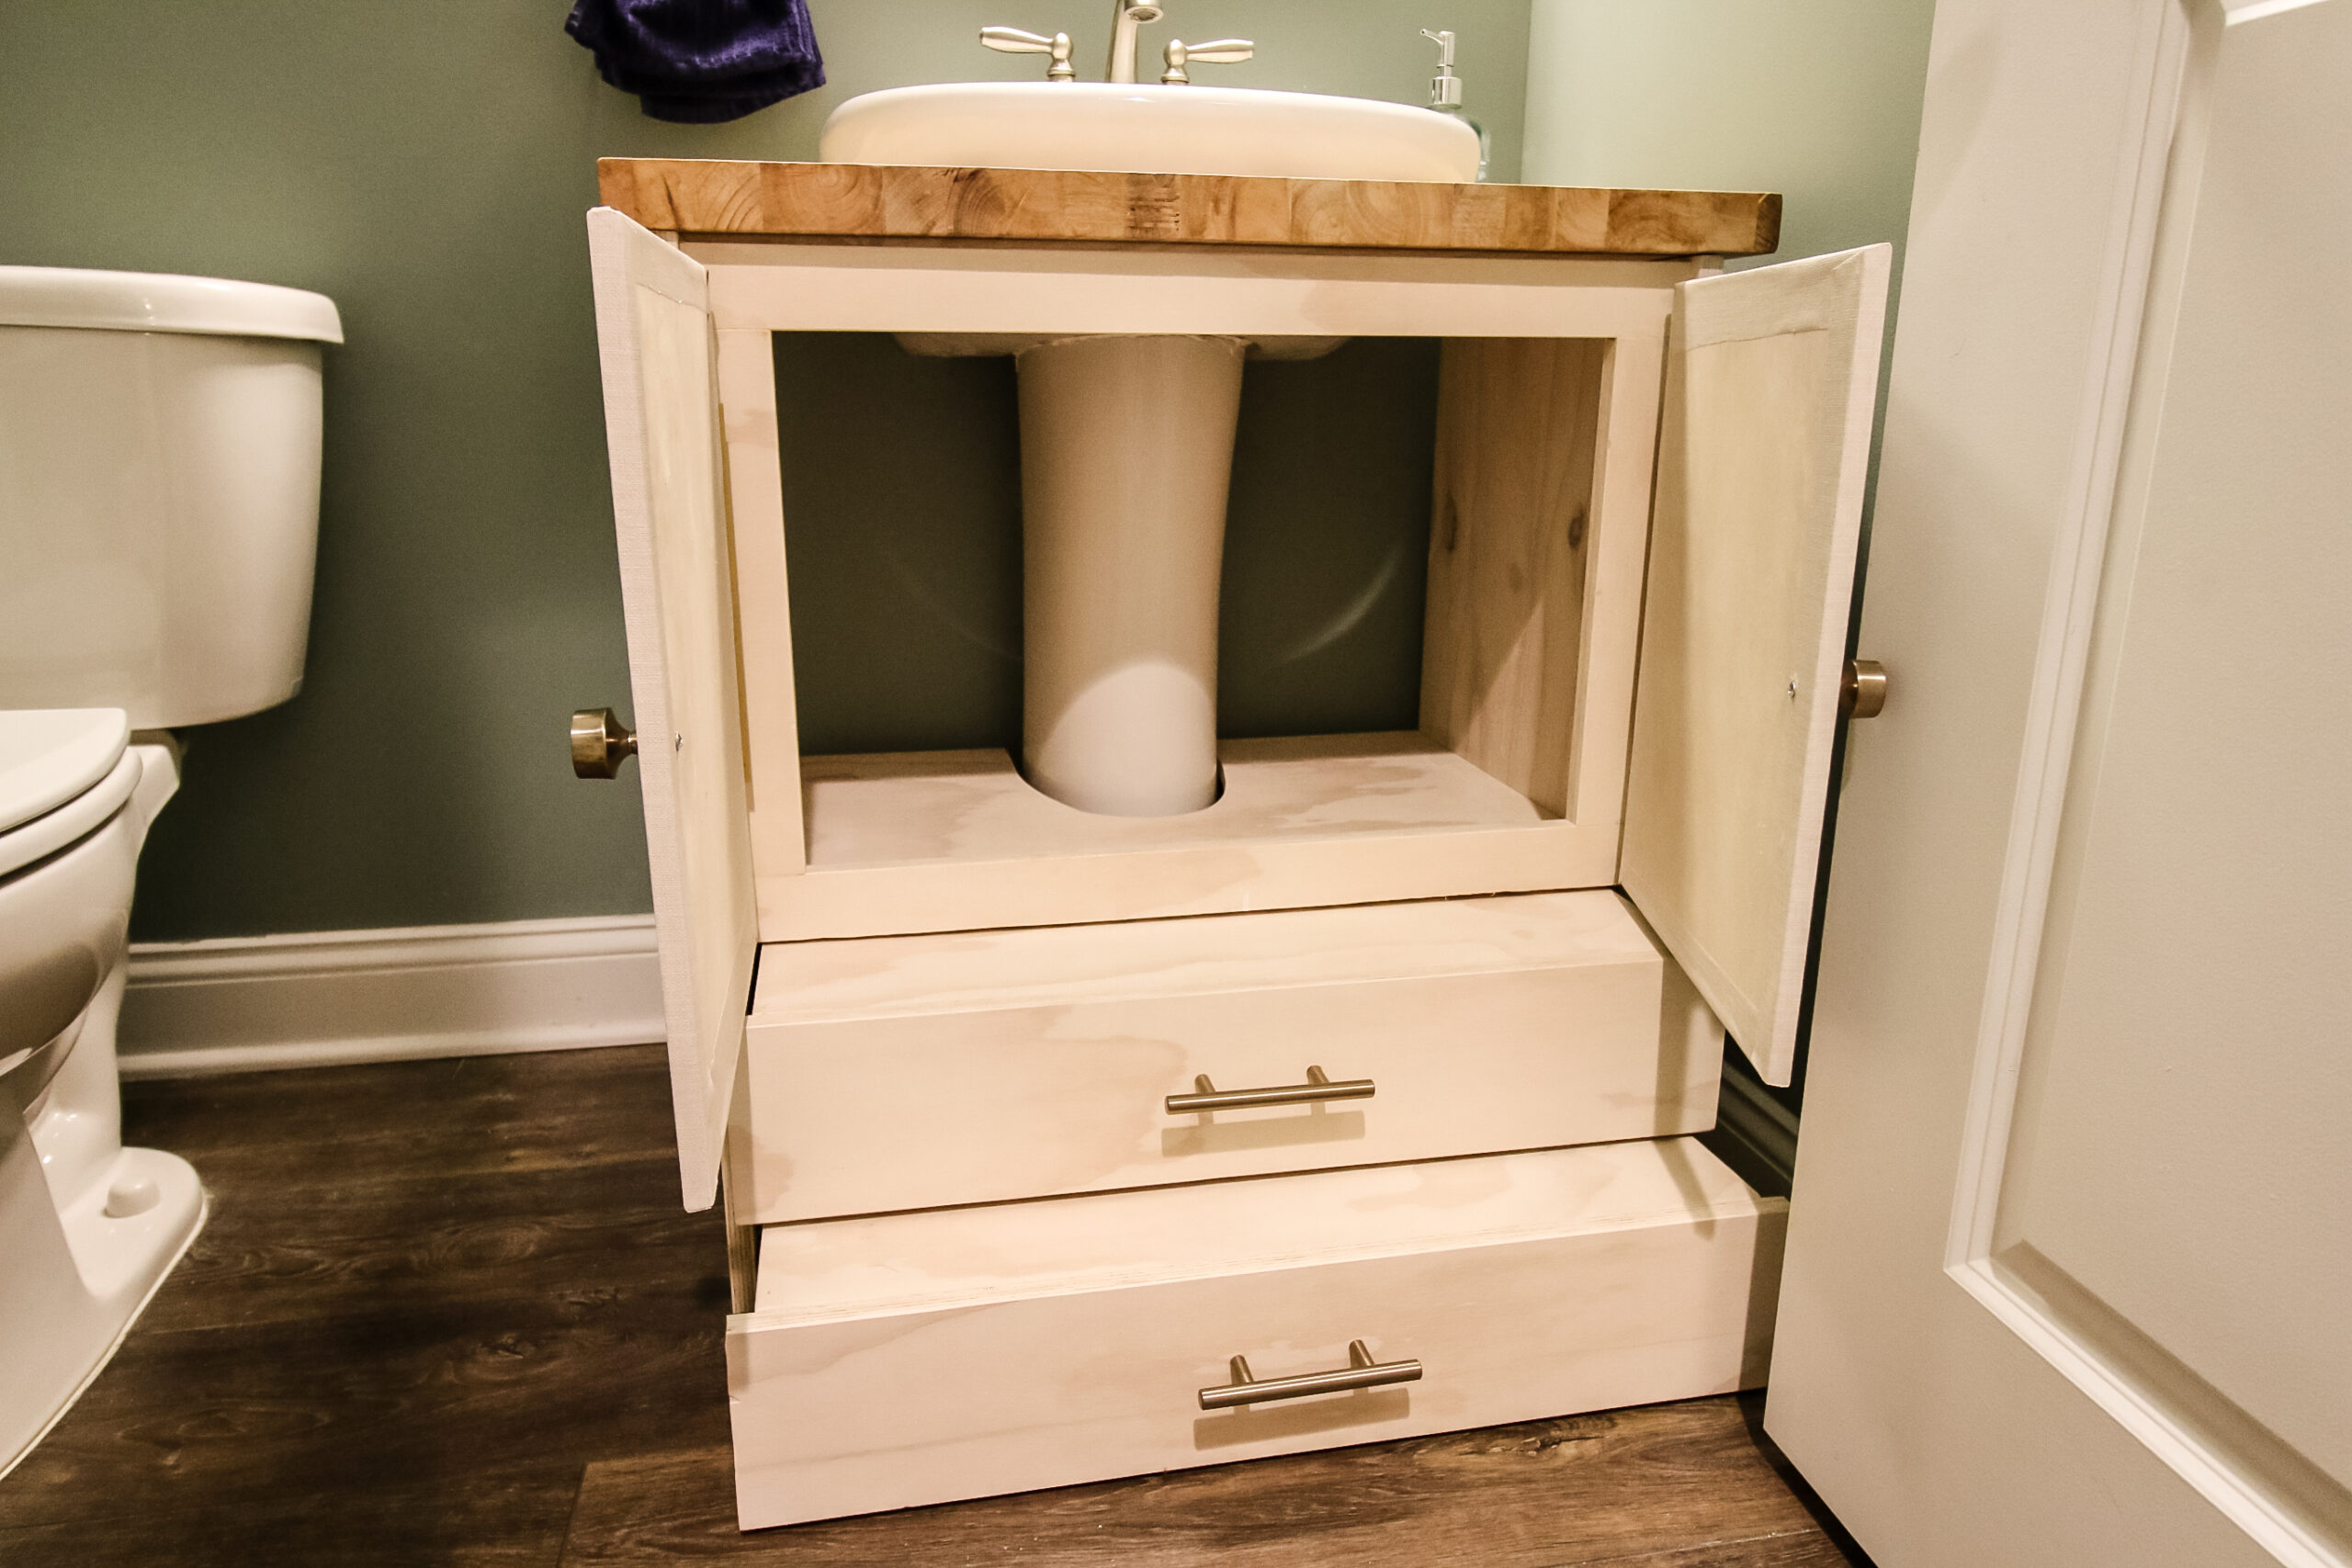 Pedestal Sink Storage Cabinet, Under Sink Cabinet With Double Doors